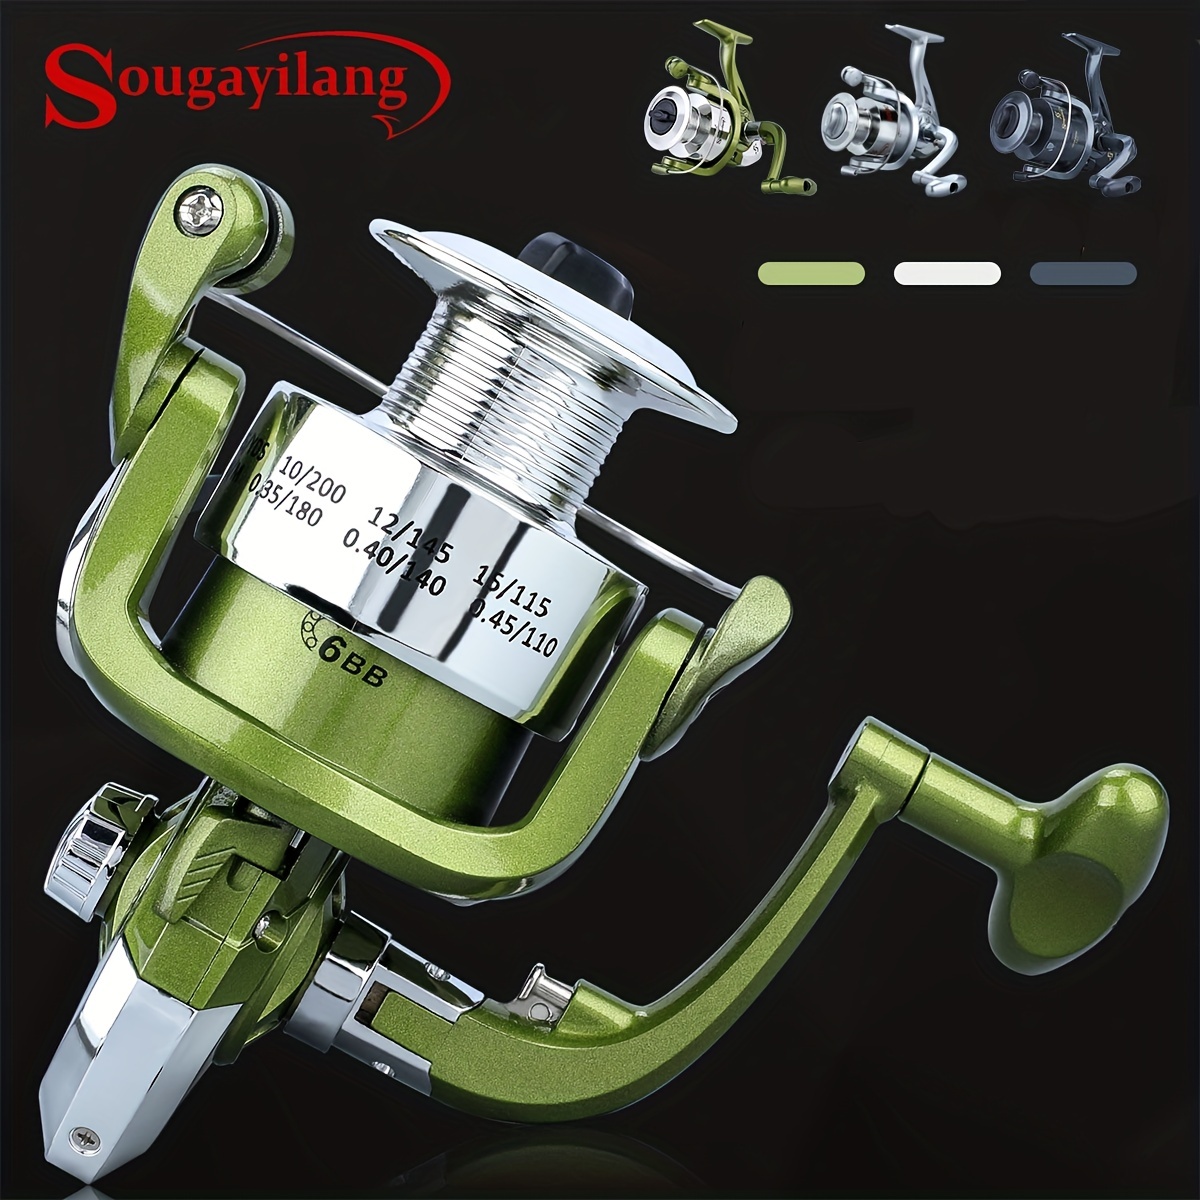 Sougayilang 1pc 1000-6000 Series Spinning Reel, 5.2: 1 Gear Ratio Metal  Fishing Reel For Freshwater